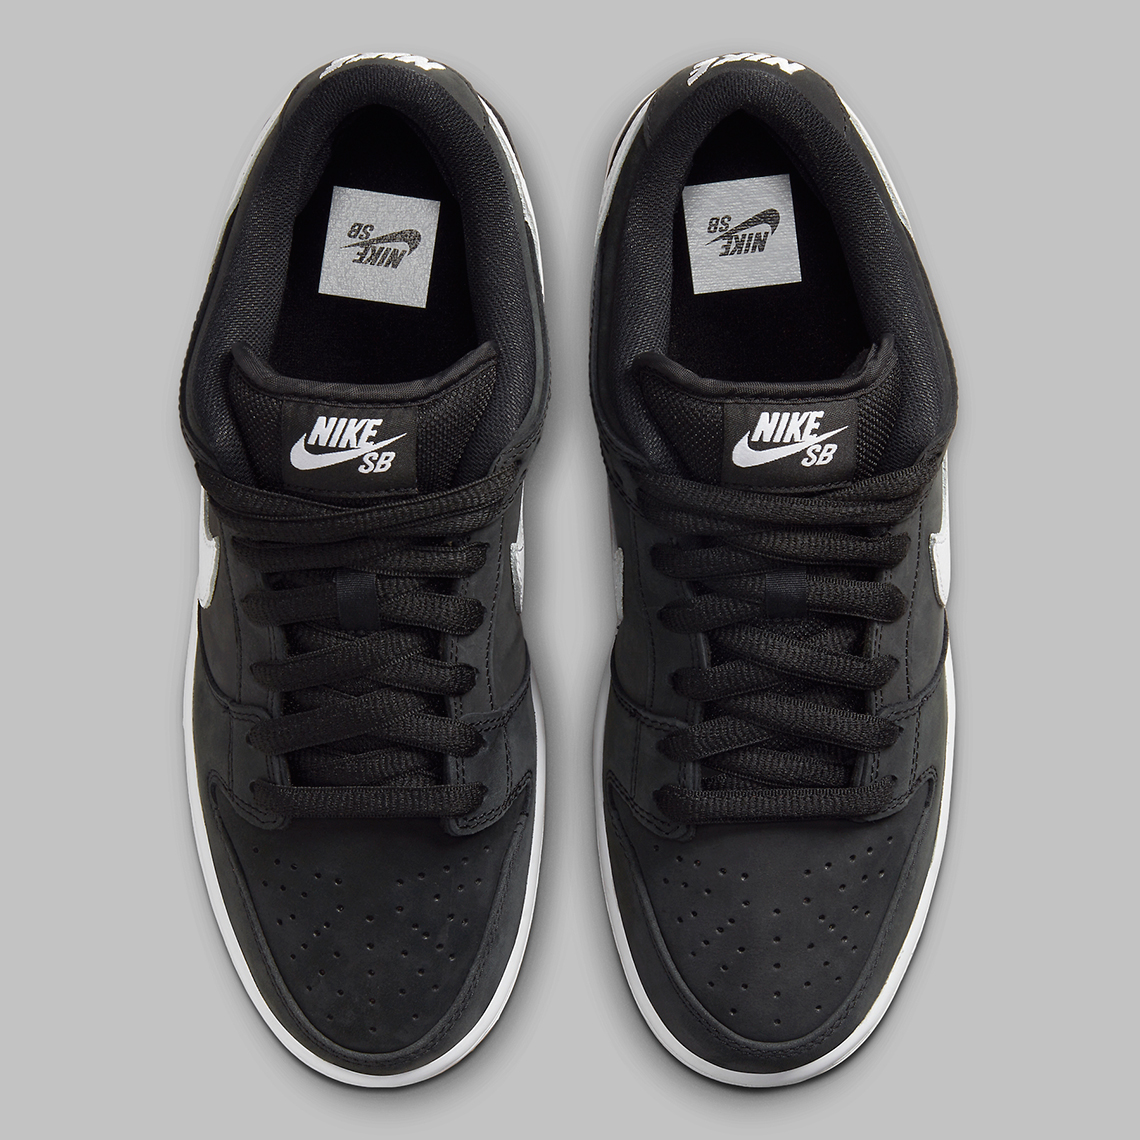 Nike SB Dunk dunk low black white Low "Black/Gum" CD2563-006 | SneakerNews.com